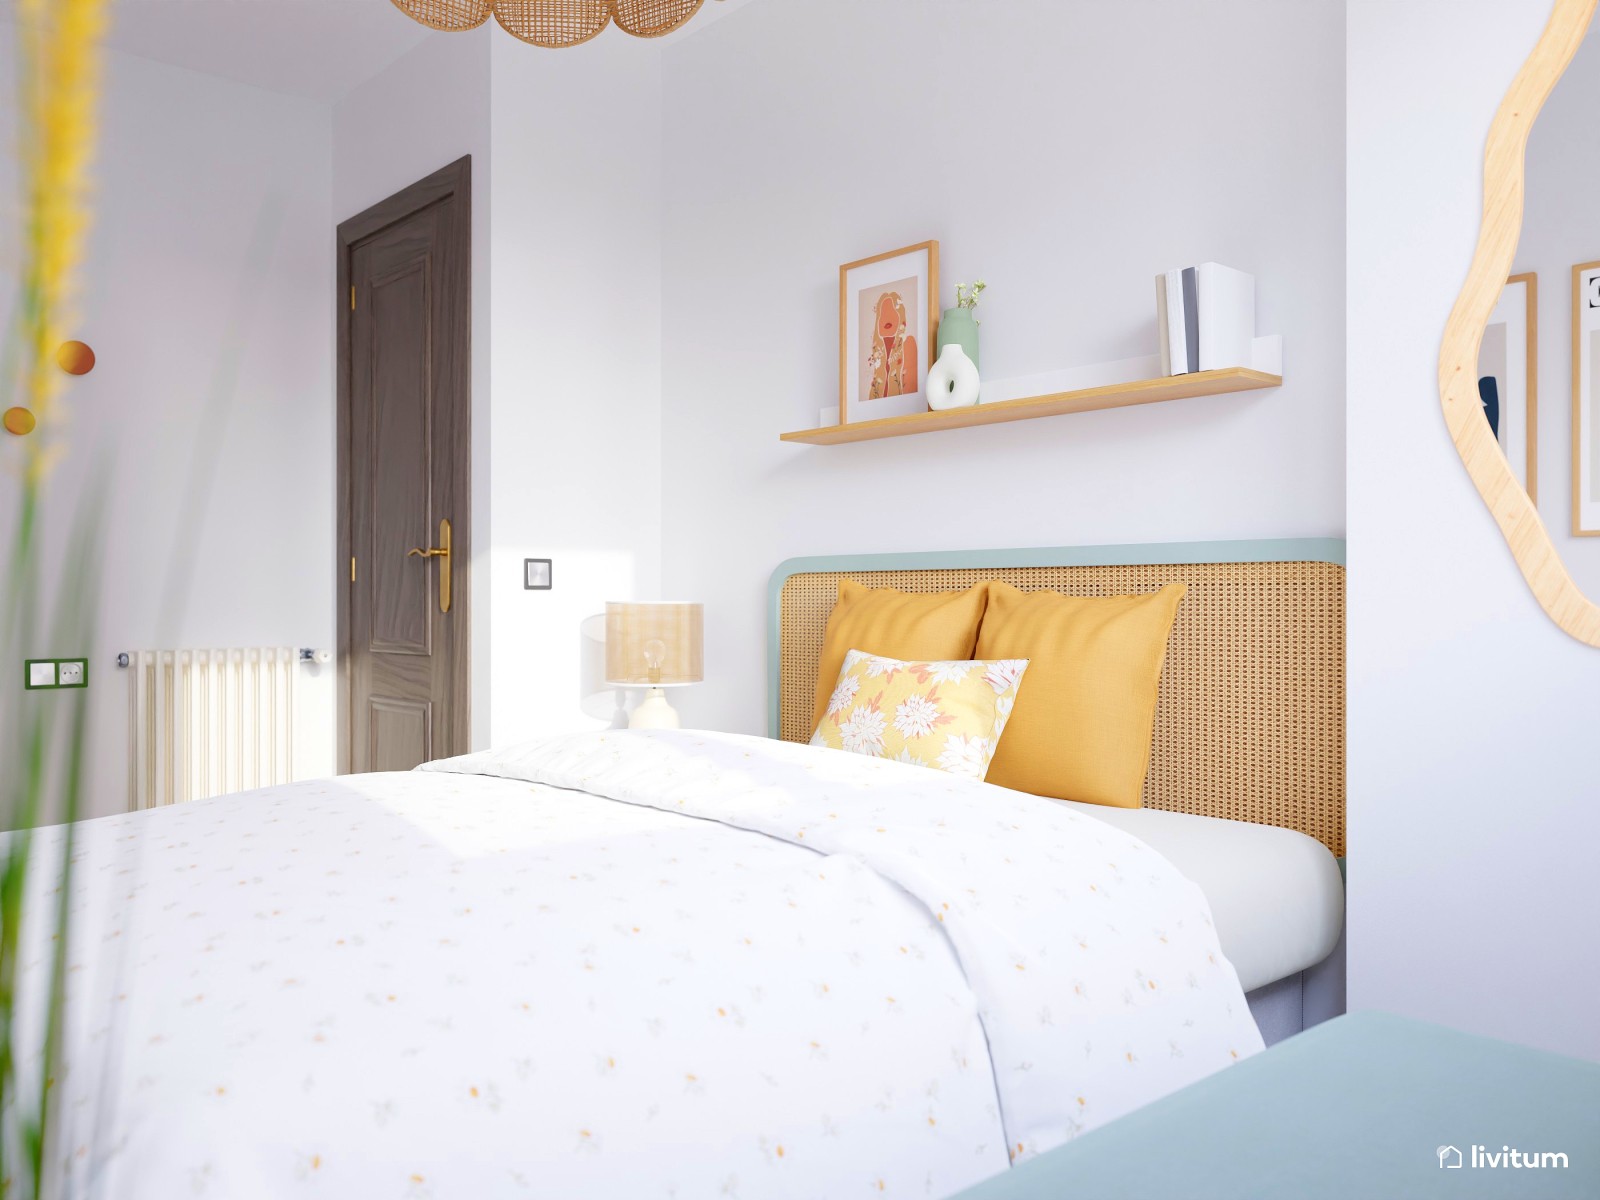 Acogedor dormitorio moderno con fibras naturales 